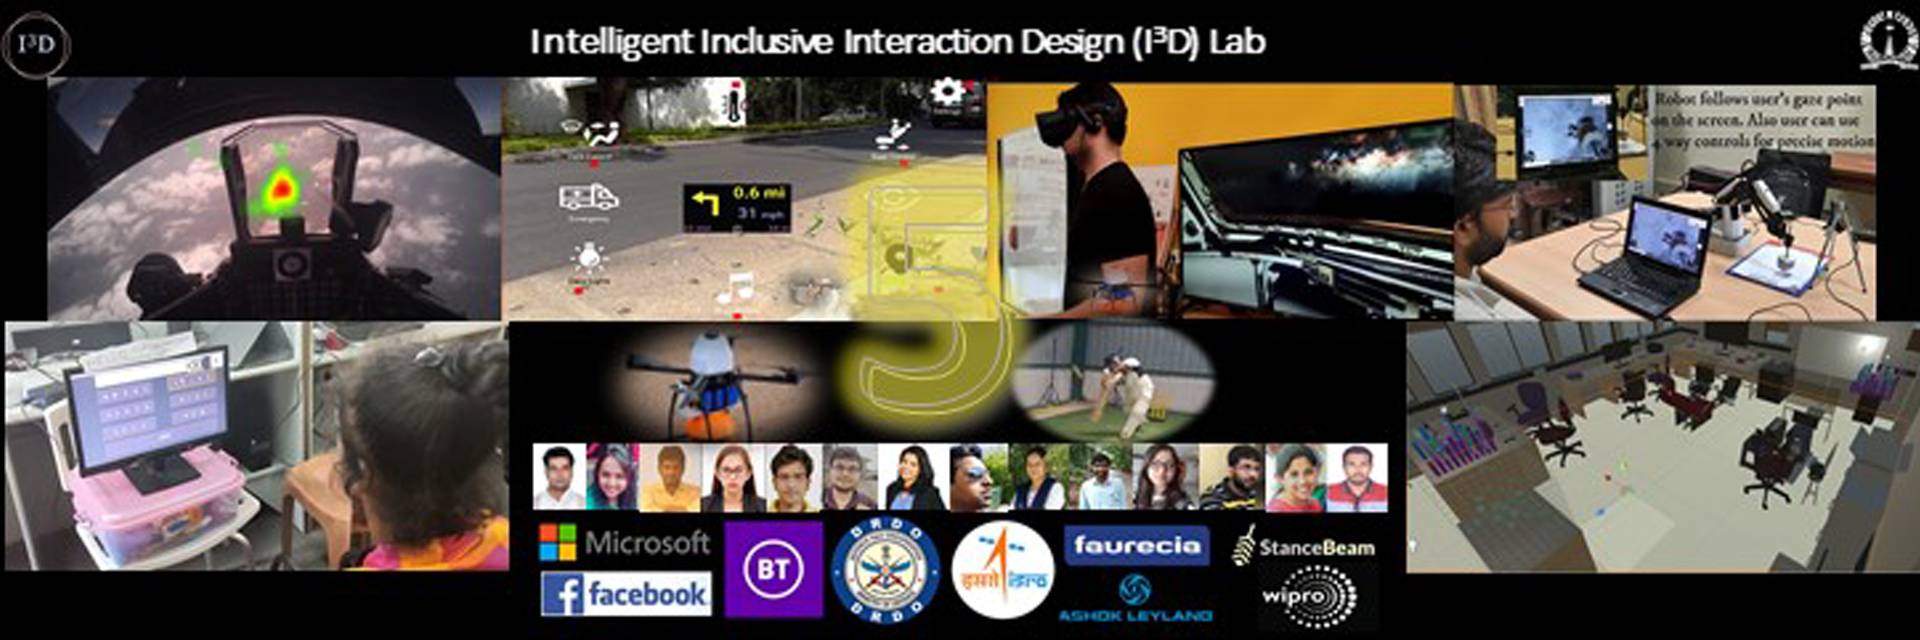 I3D Lab